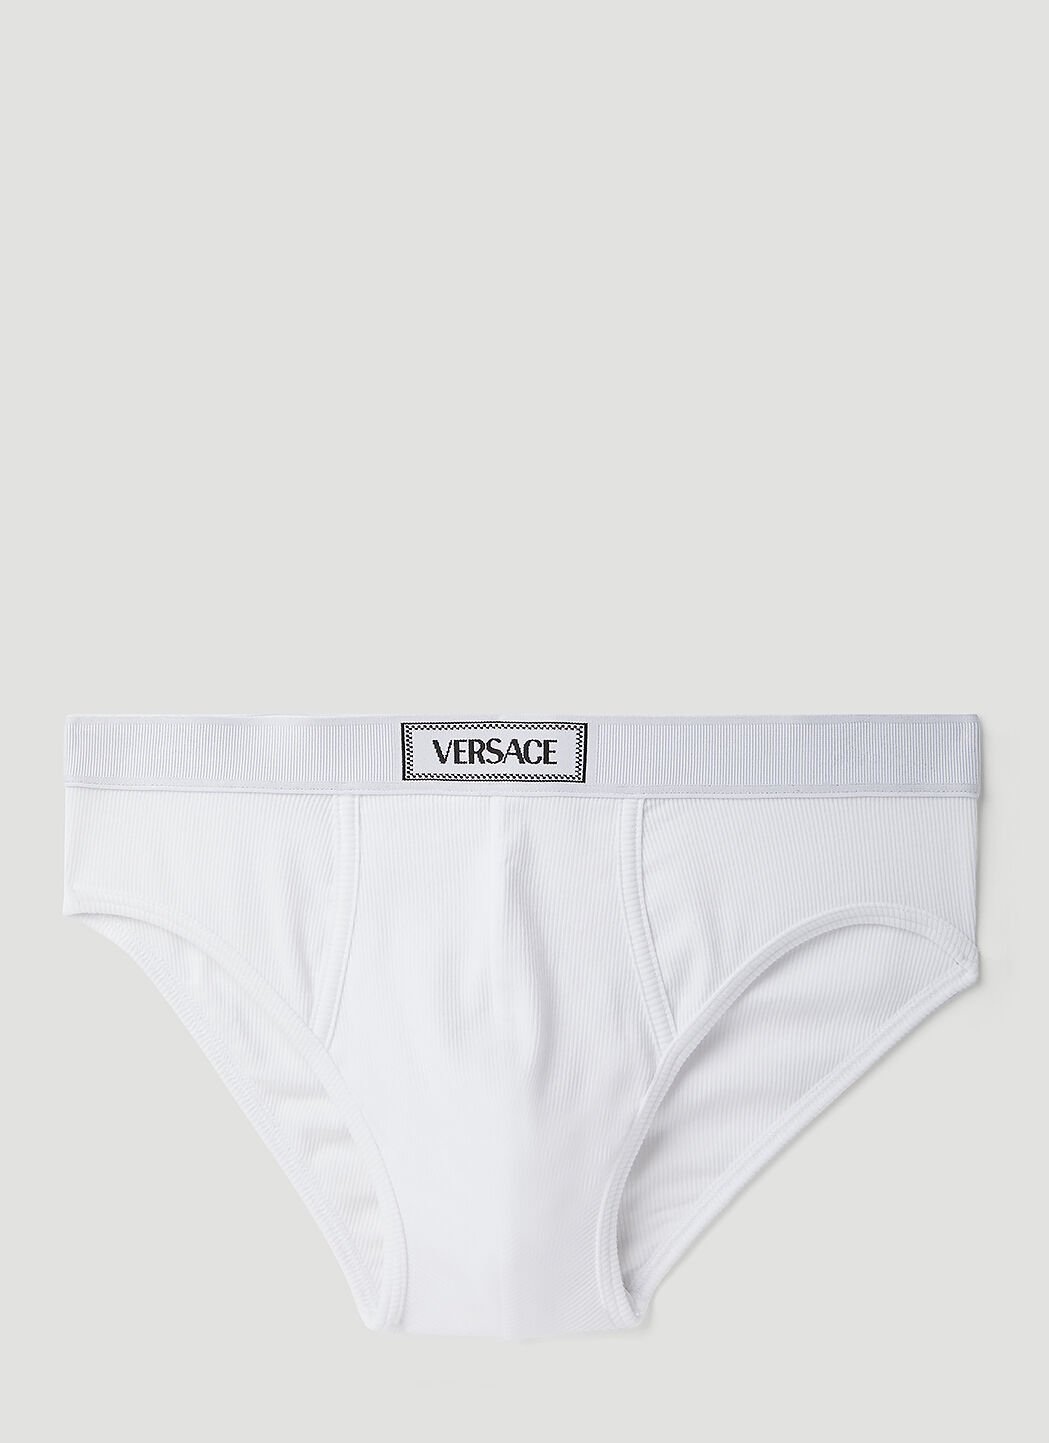 Versace 90S 徽标三角裤 白色 ver0154004